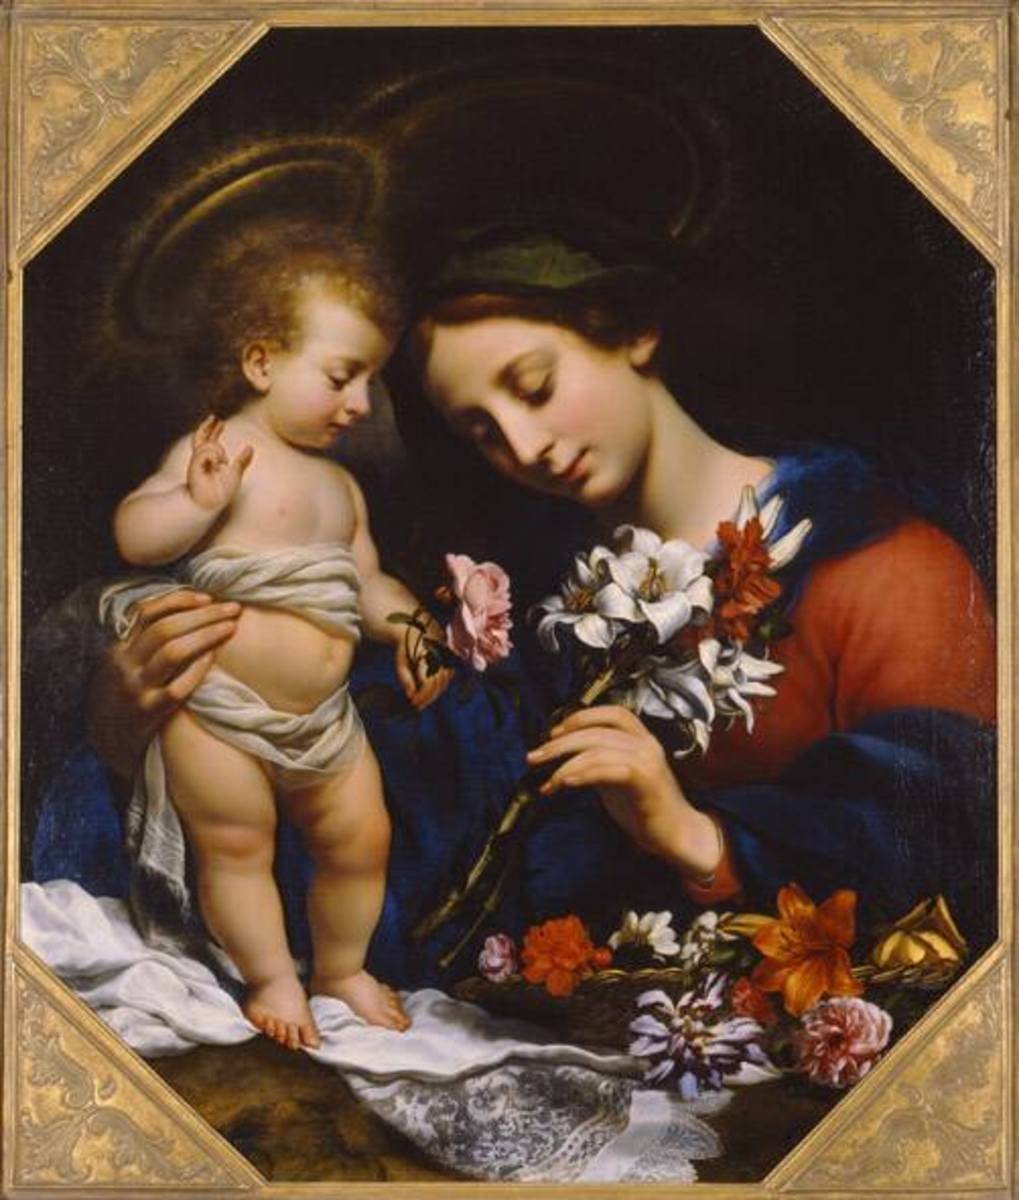 Carlo Dolci | Madonna mit der Lilie | Displayed motifs: Halo, Human face, Clothing, Girl, Woman, Flower, Madonna, 